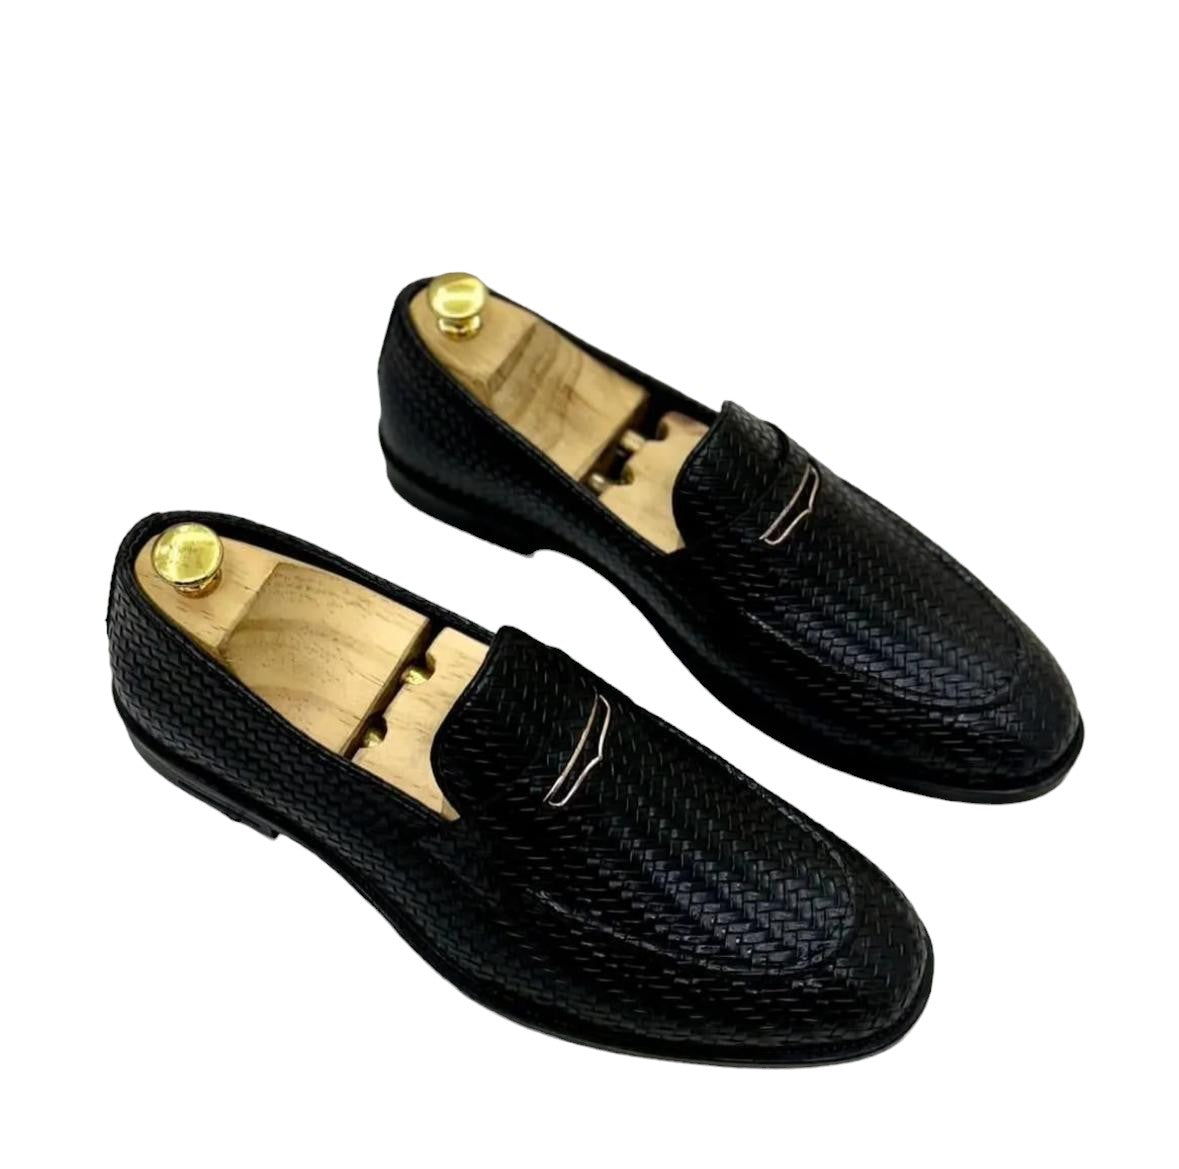 Jack Marc Premium Croco Loafers for Men - JACKMARC.COM